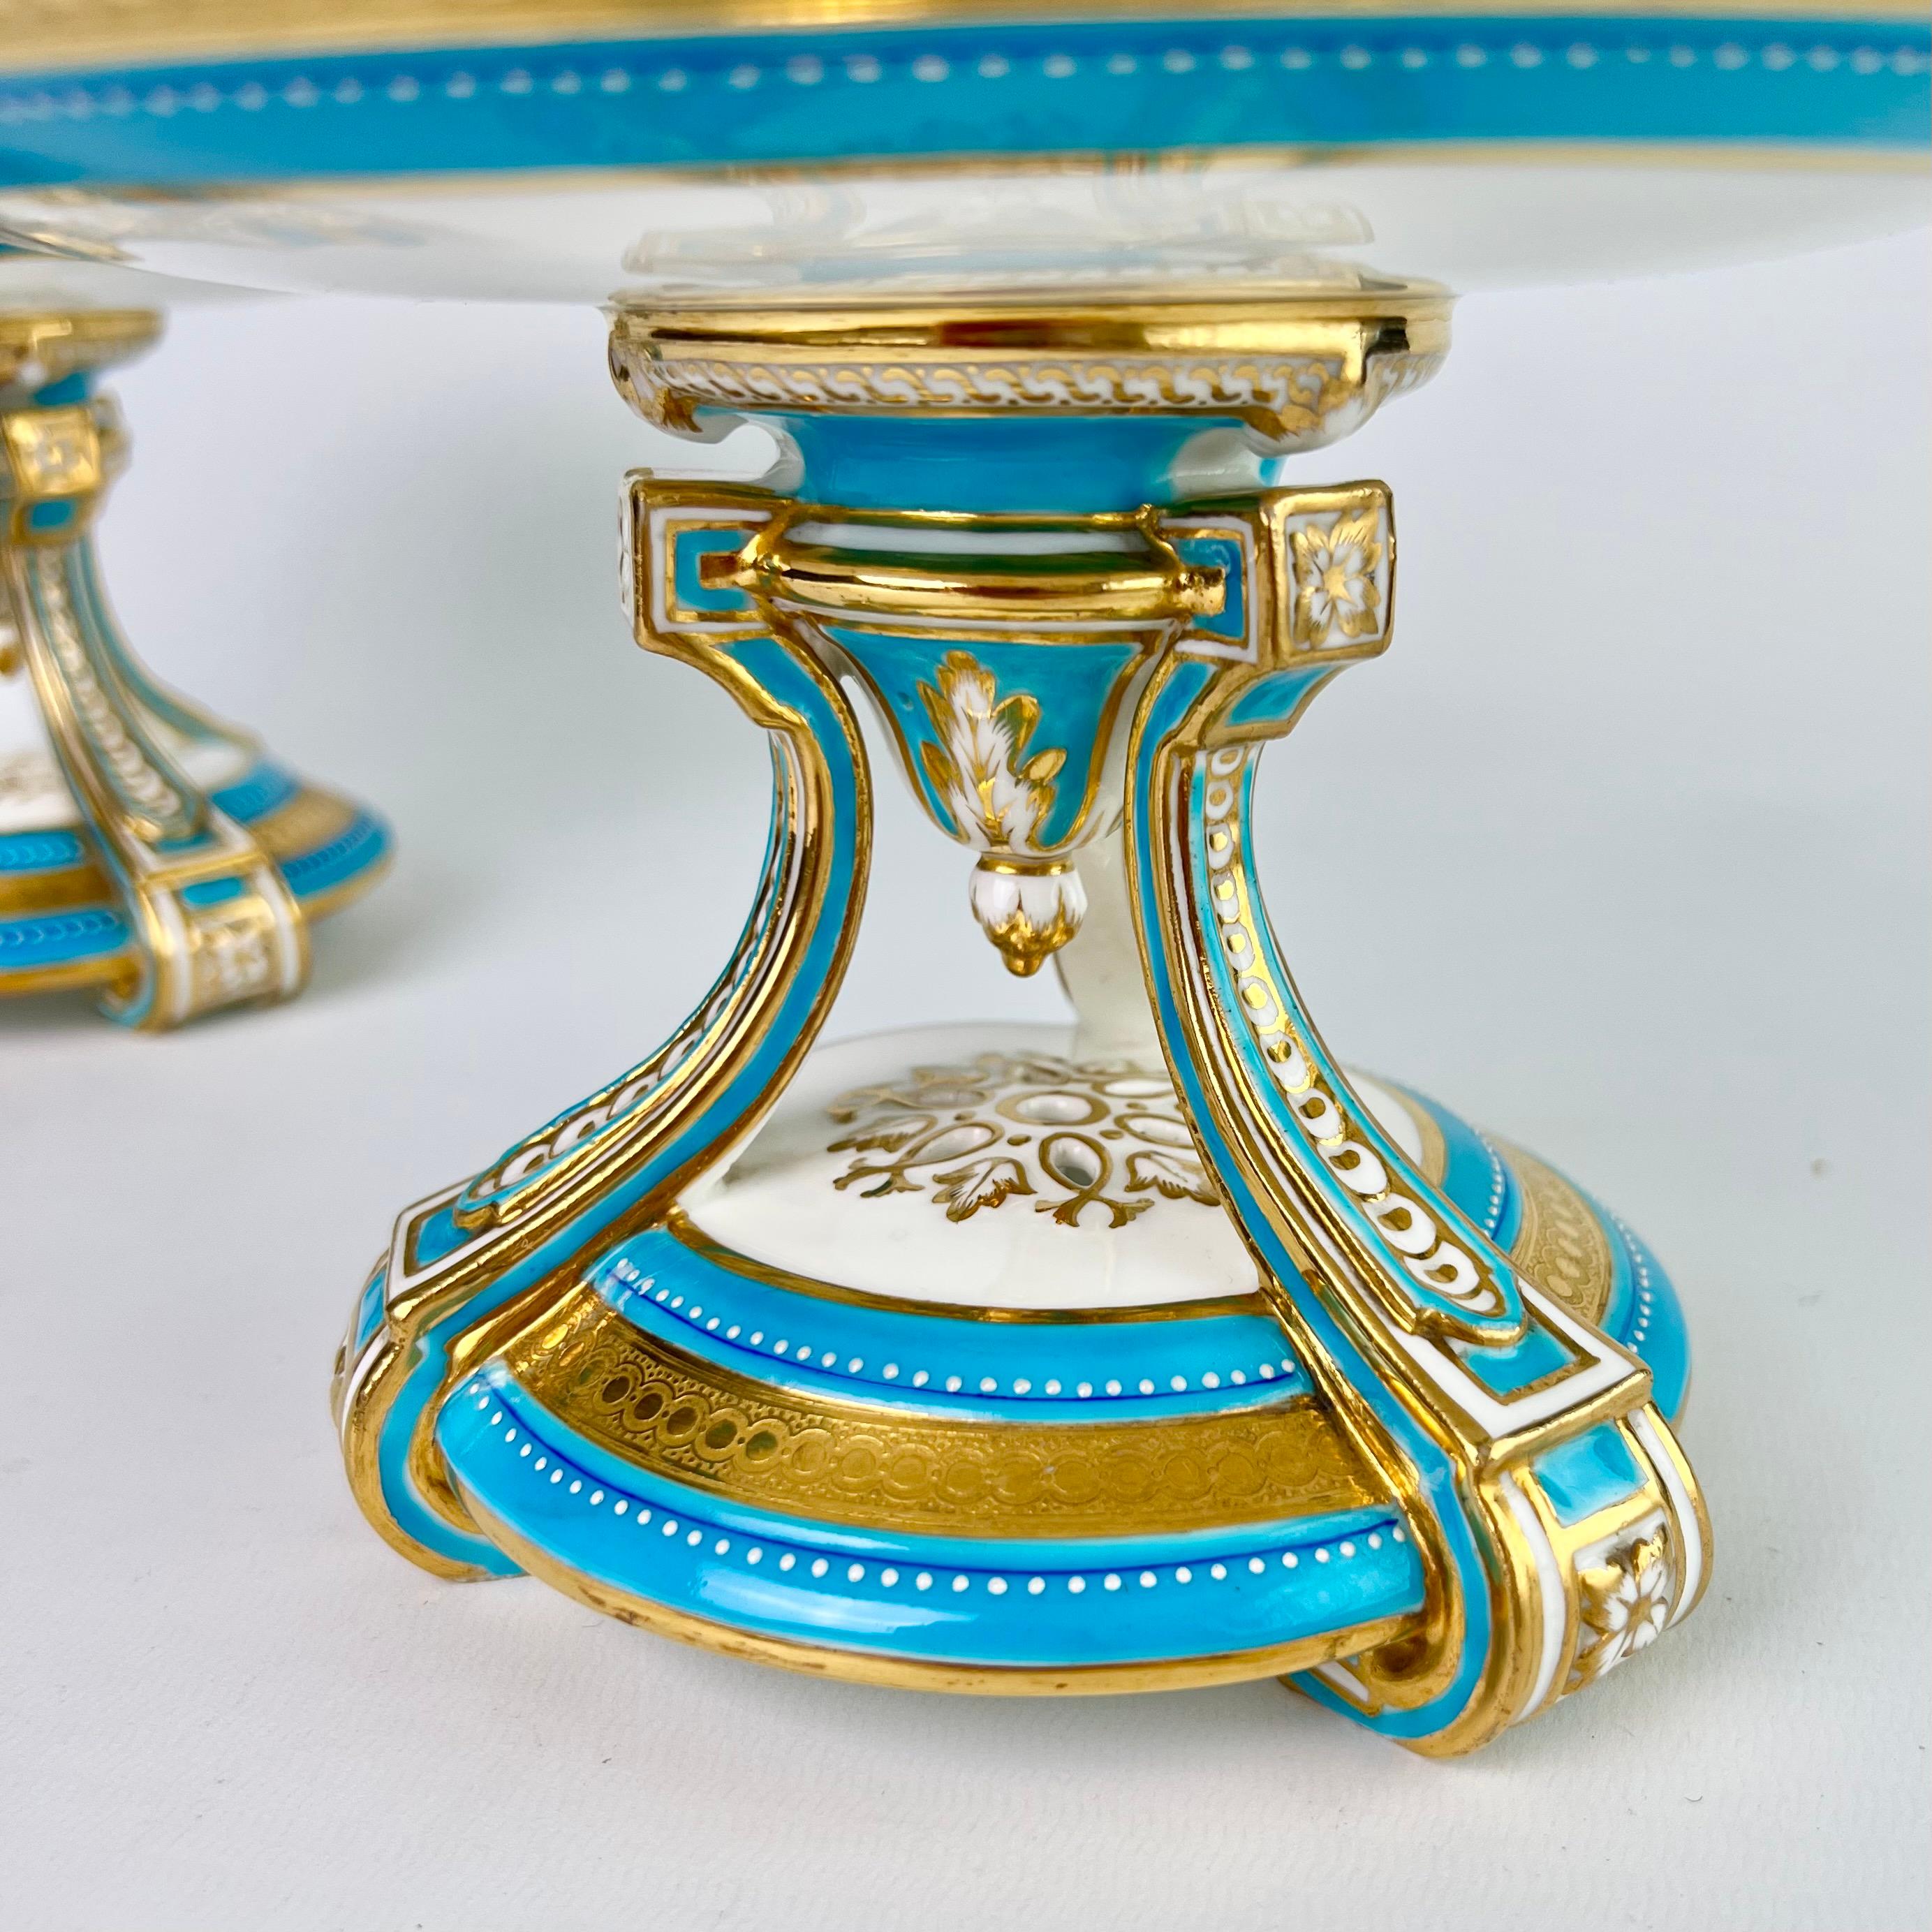 Hand-Painted Minton Porcelain Dessert Service, Turquoise, Equestrian Horses, Victorian, 1871 For Sale